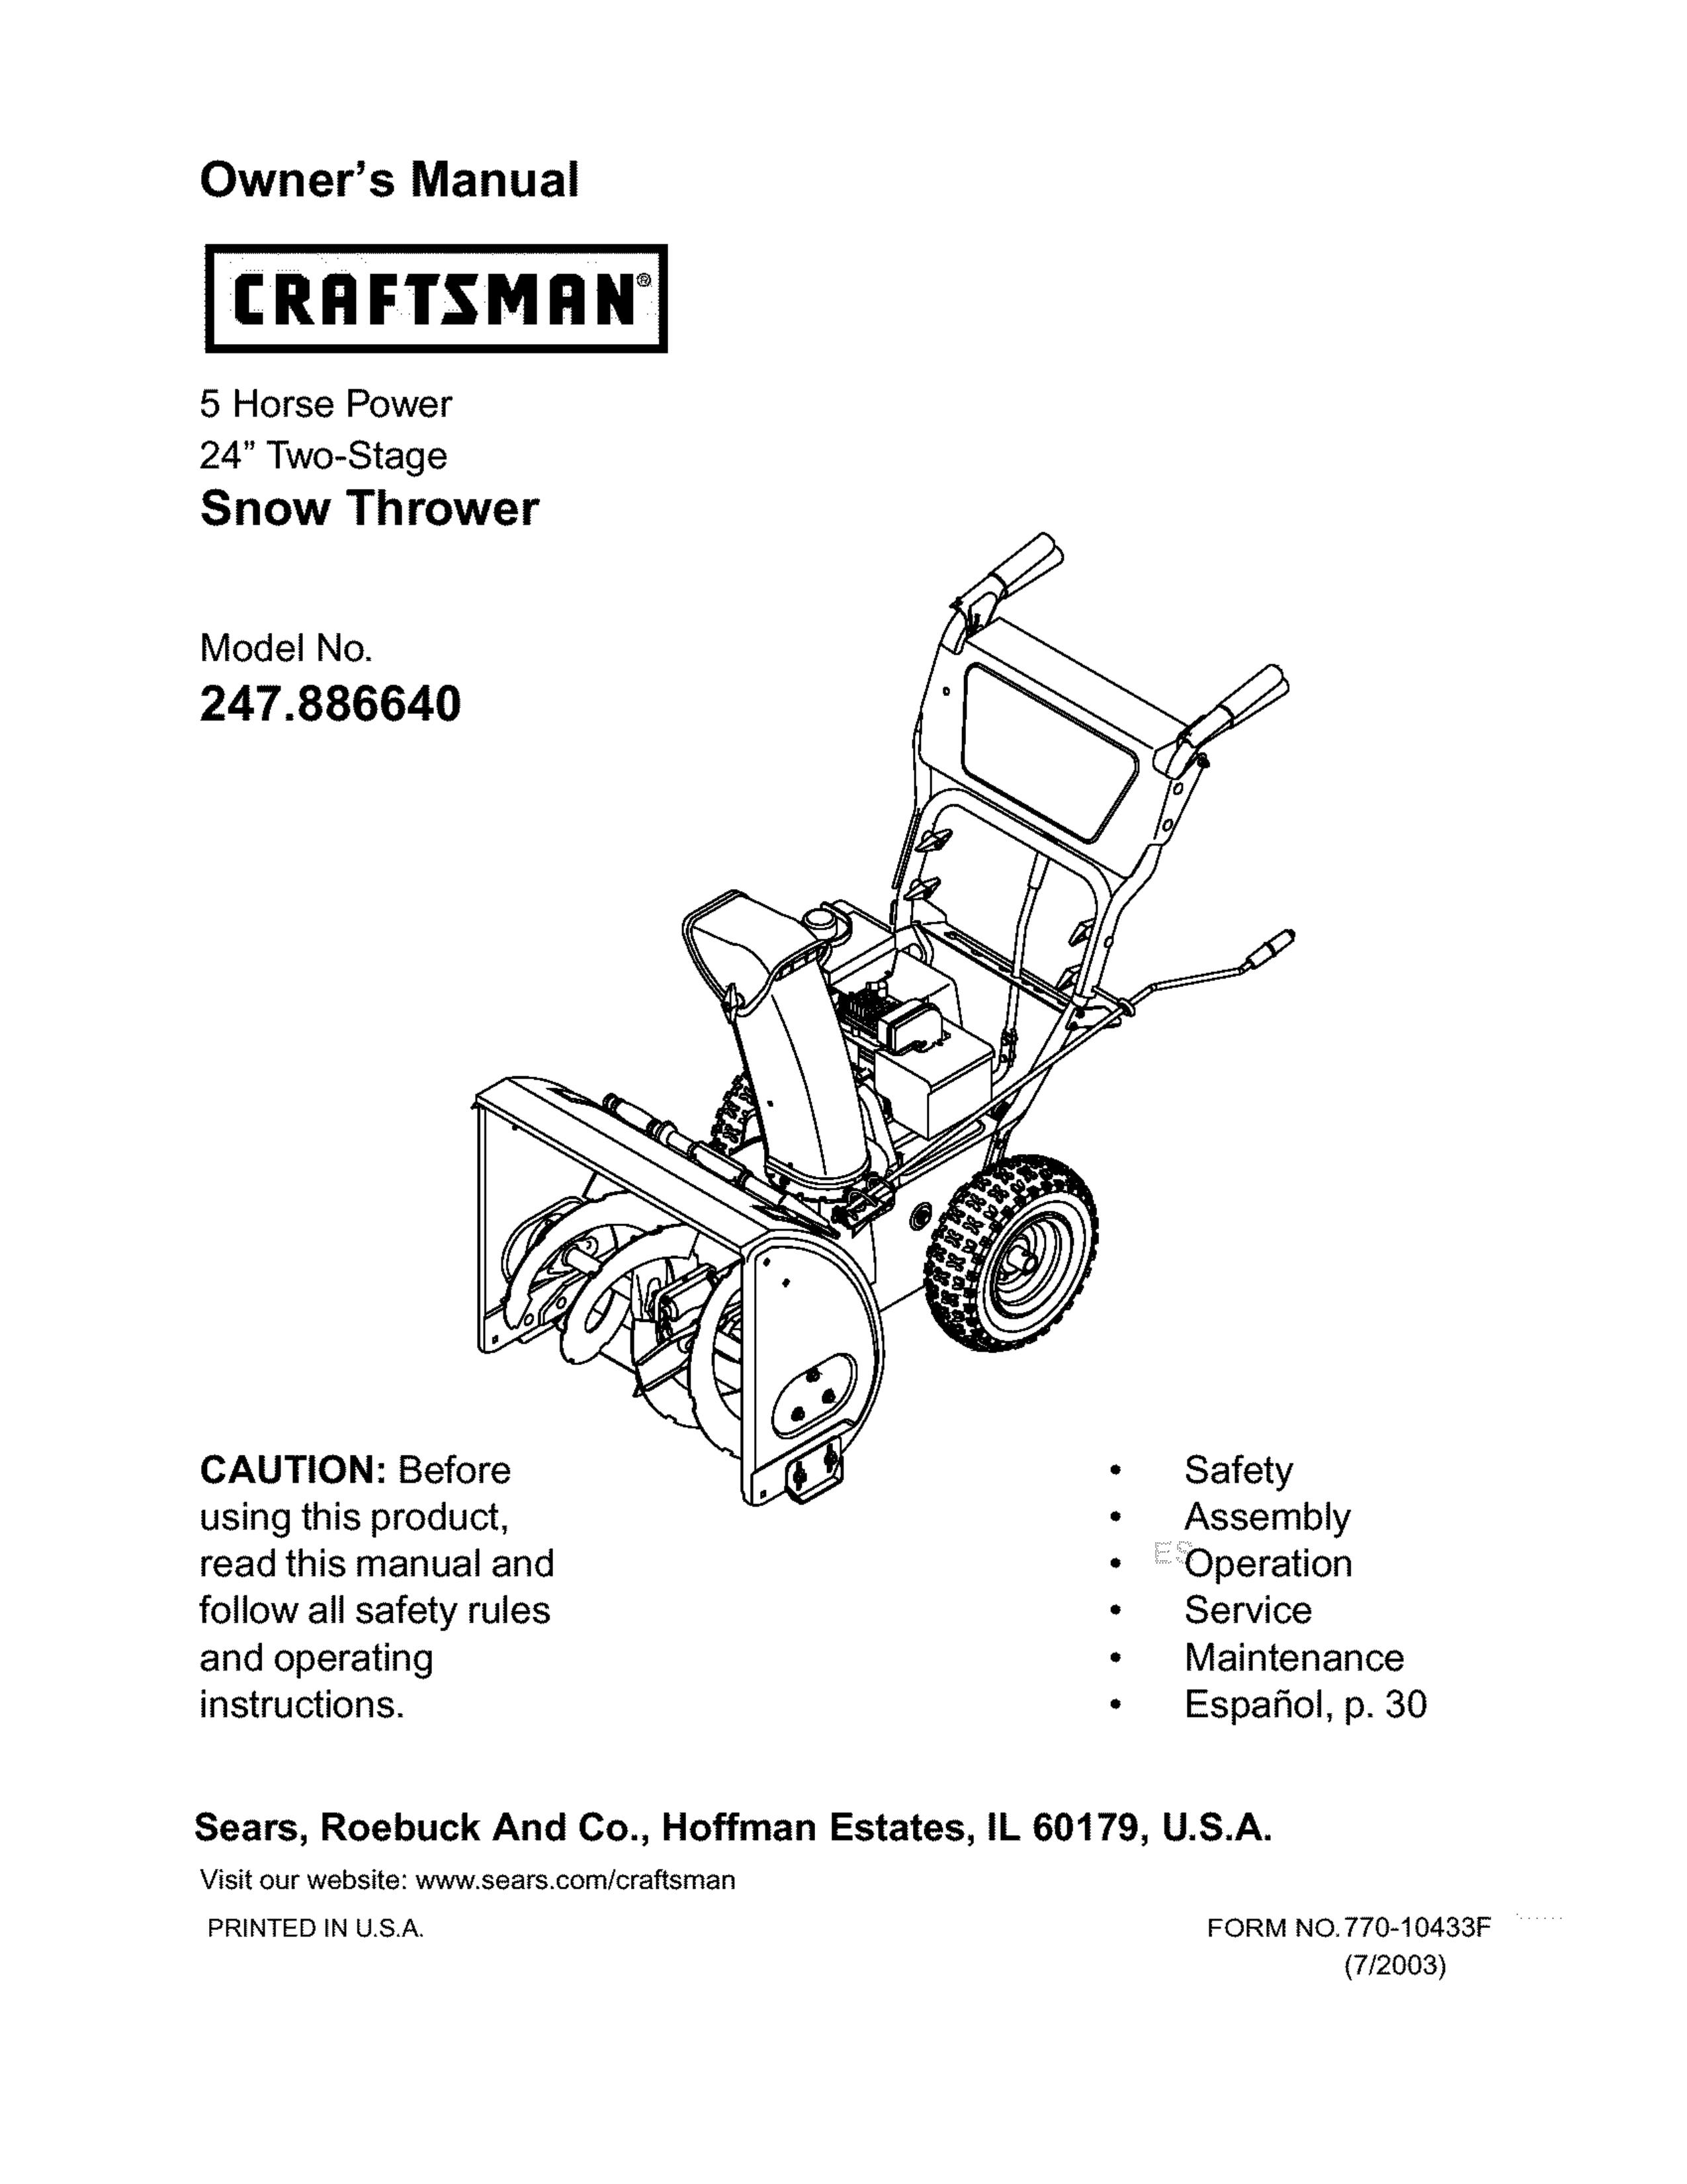 Craftsman 247.88664 Snow Blower User Manual